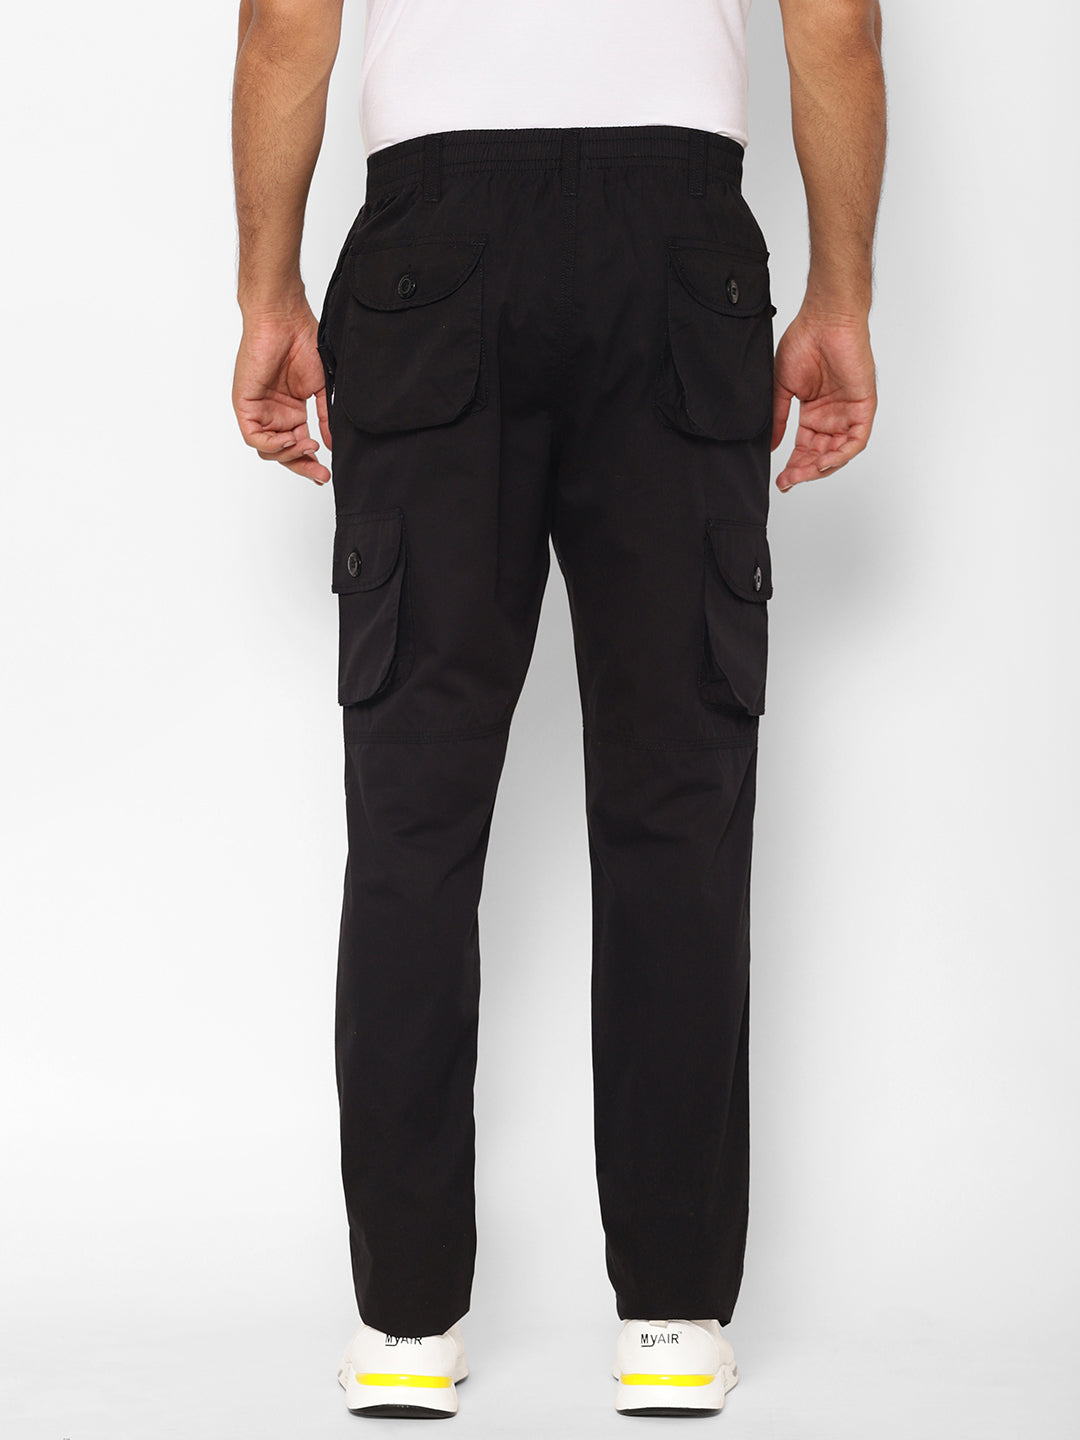 Urban Classics Men Cargo Jeans Pants 6-Pockets rinsed wash black